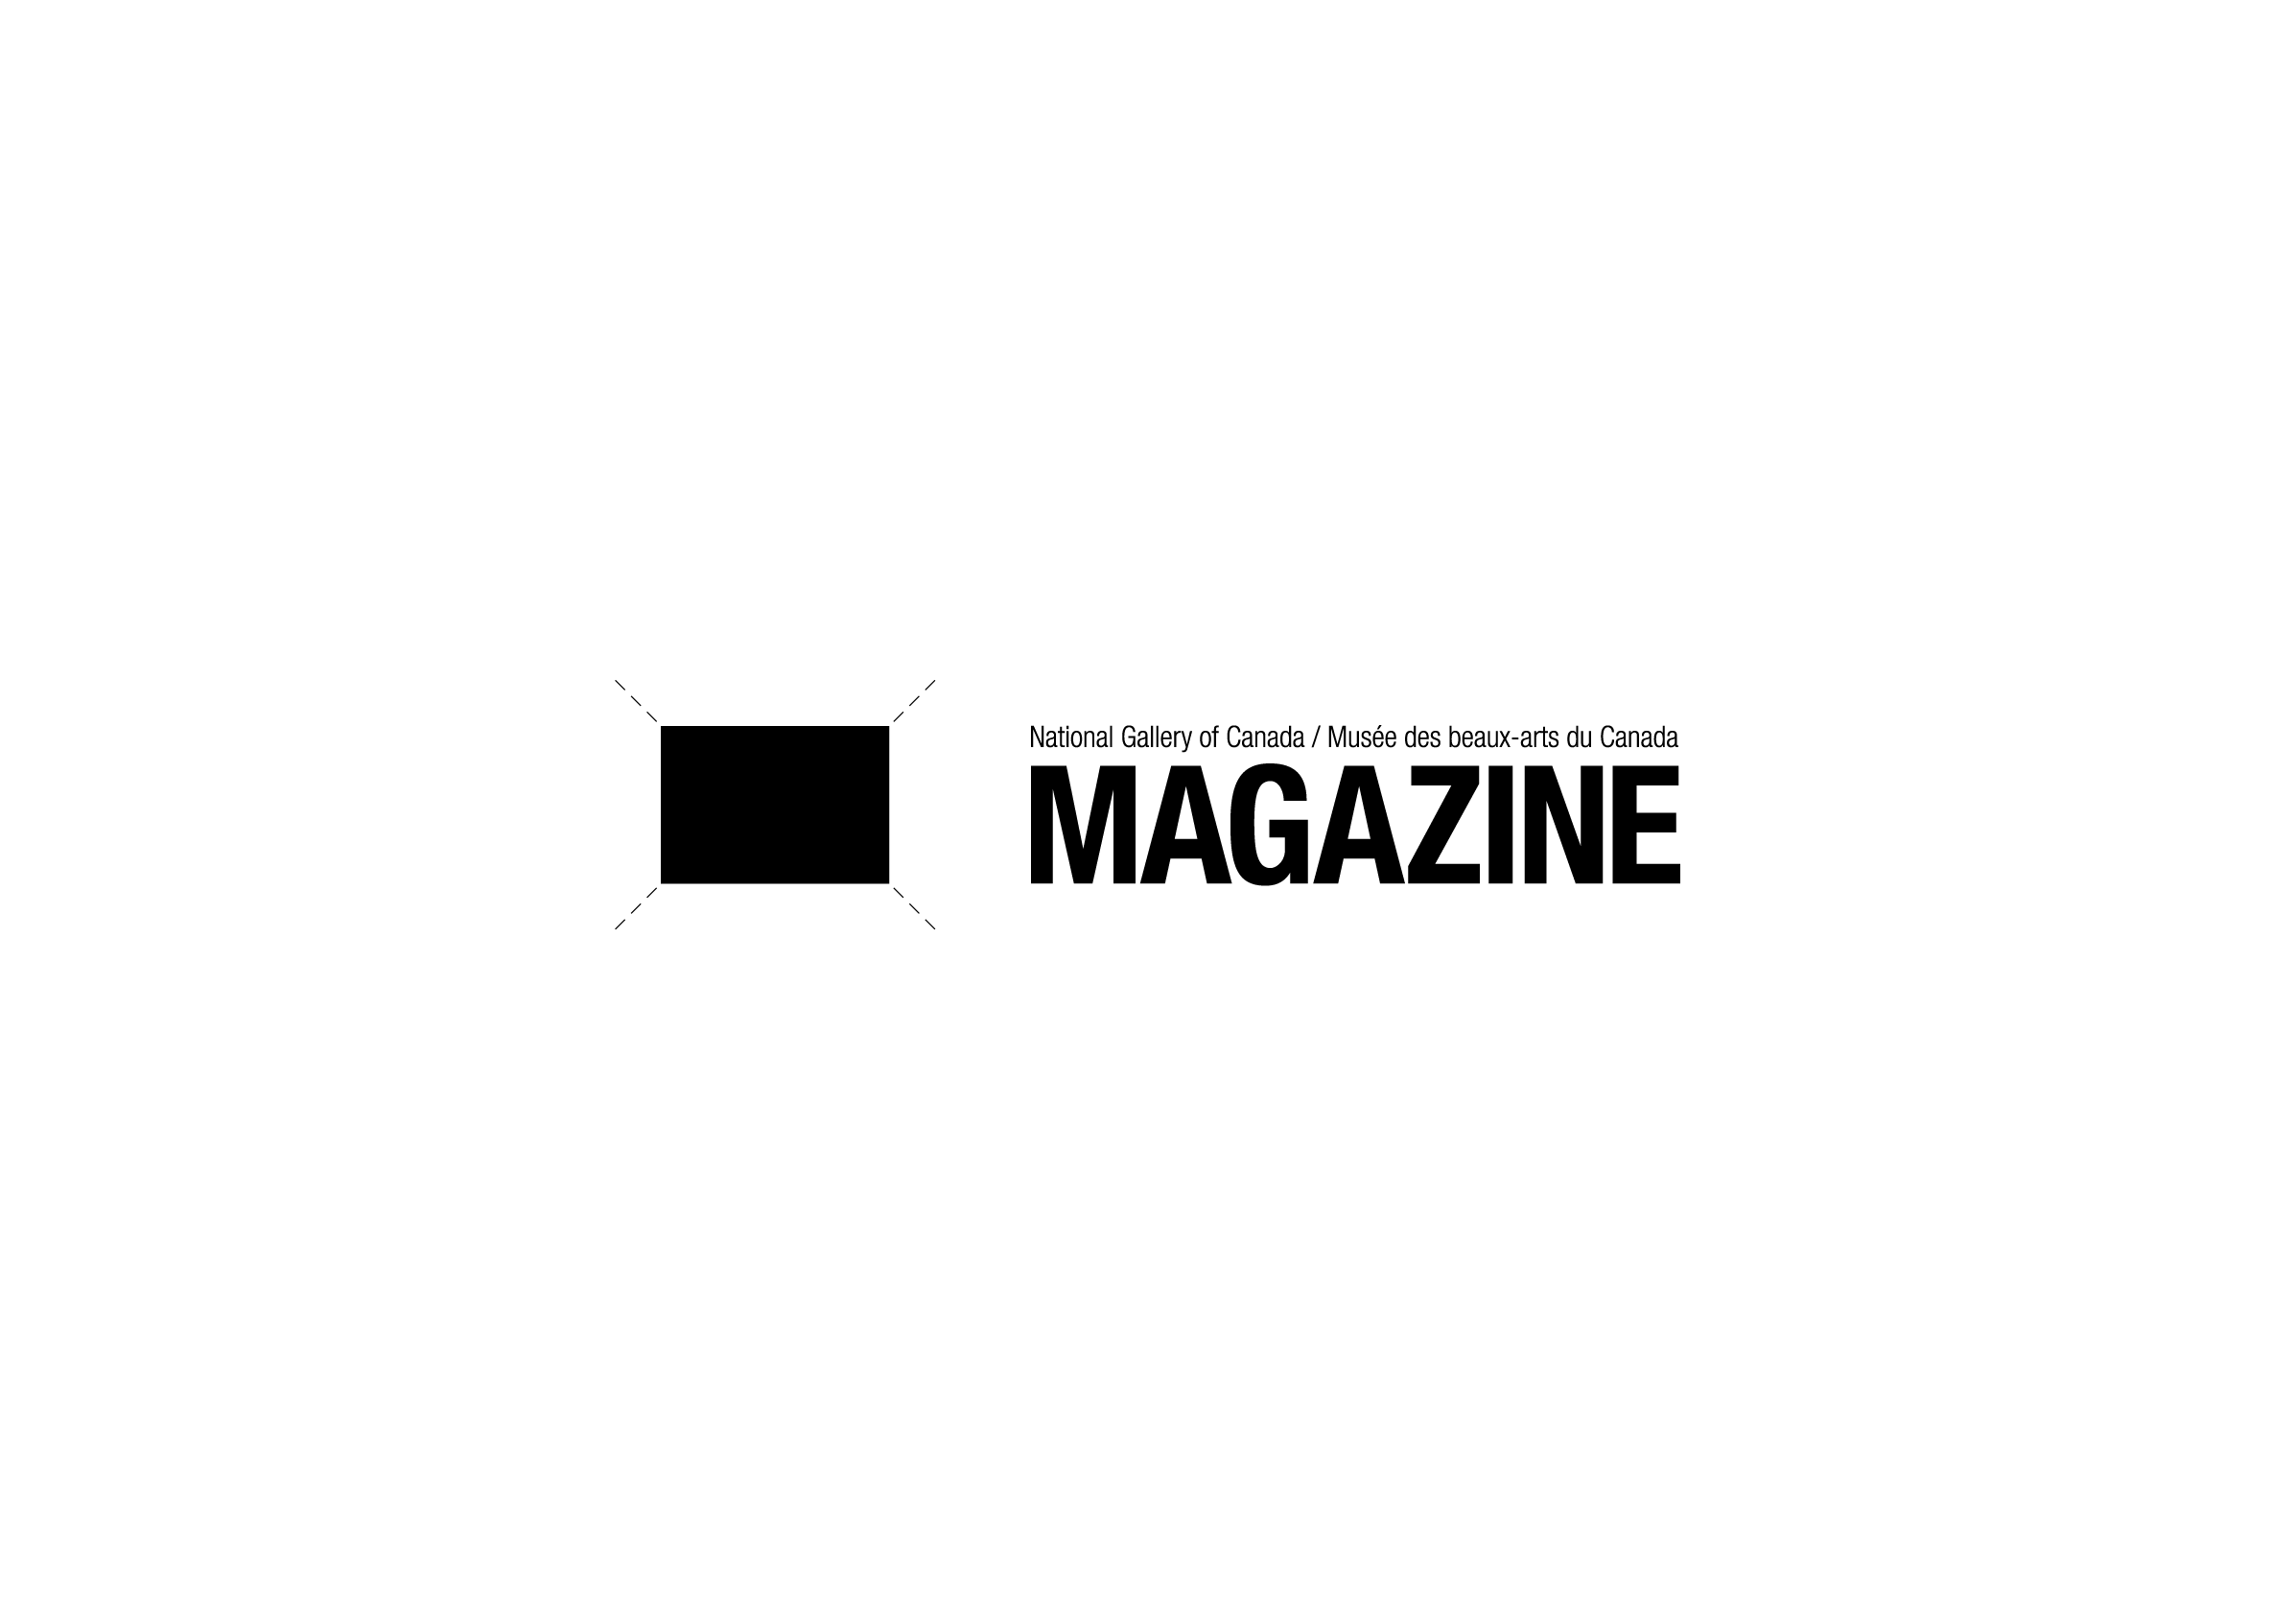 Magizine Logo - National Gallery of Canada: Branding for online magazine - idApostle ...